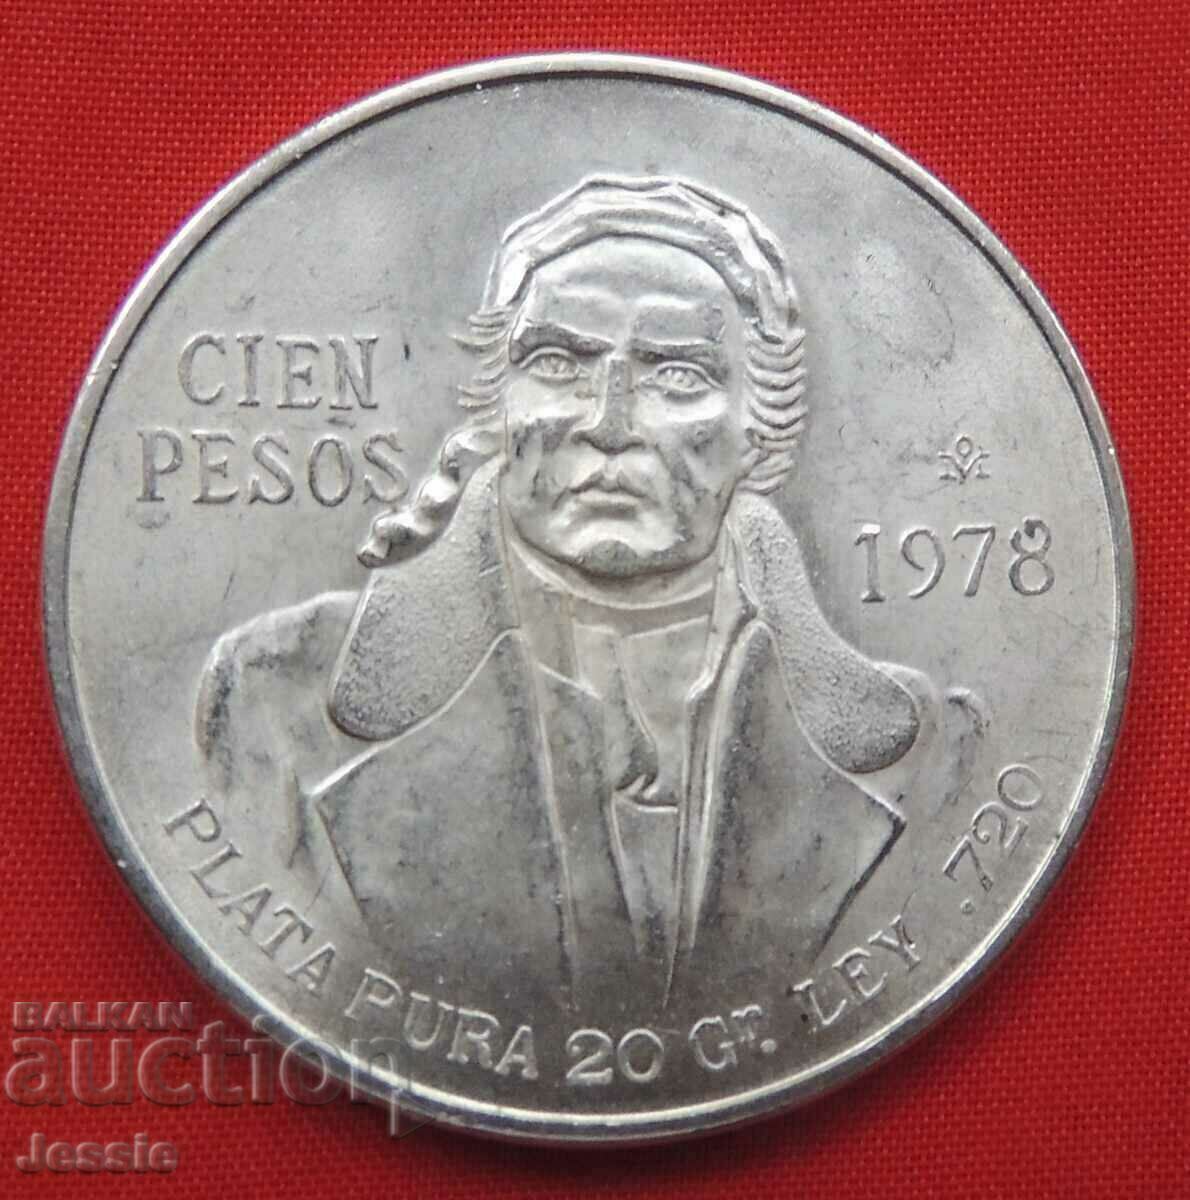 100 Cien Pesos 1978 Mexico